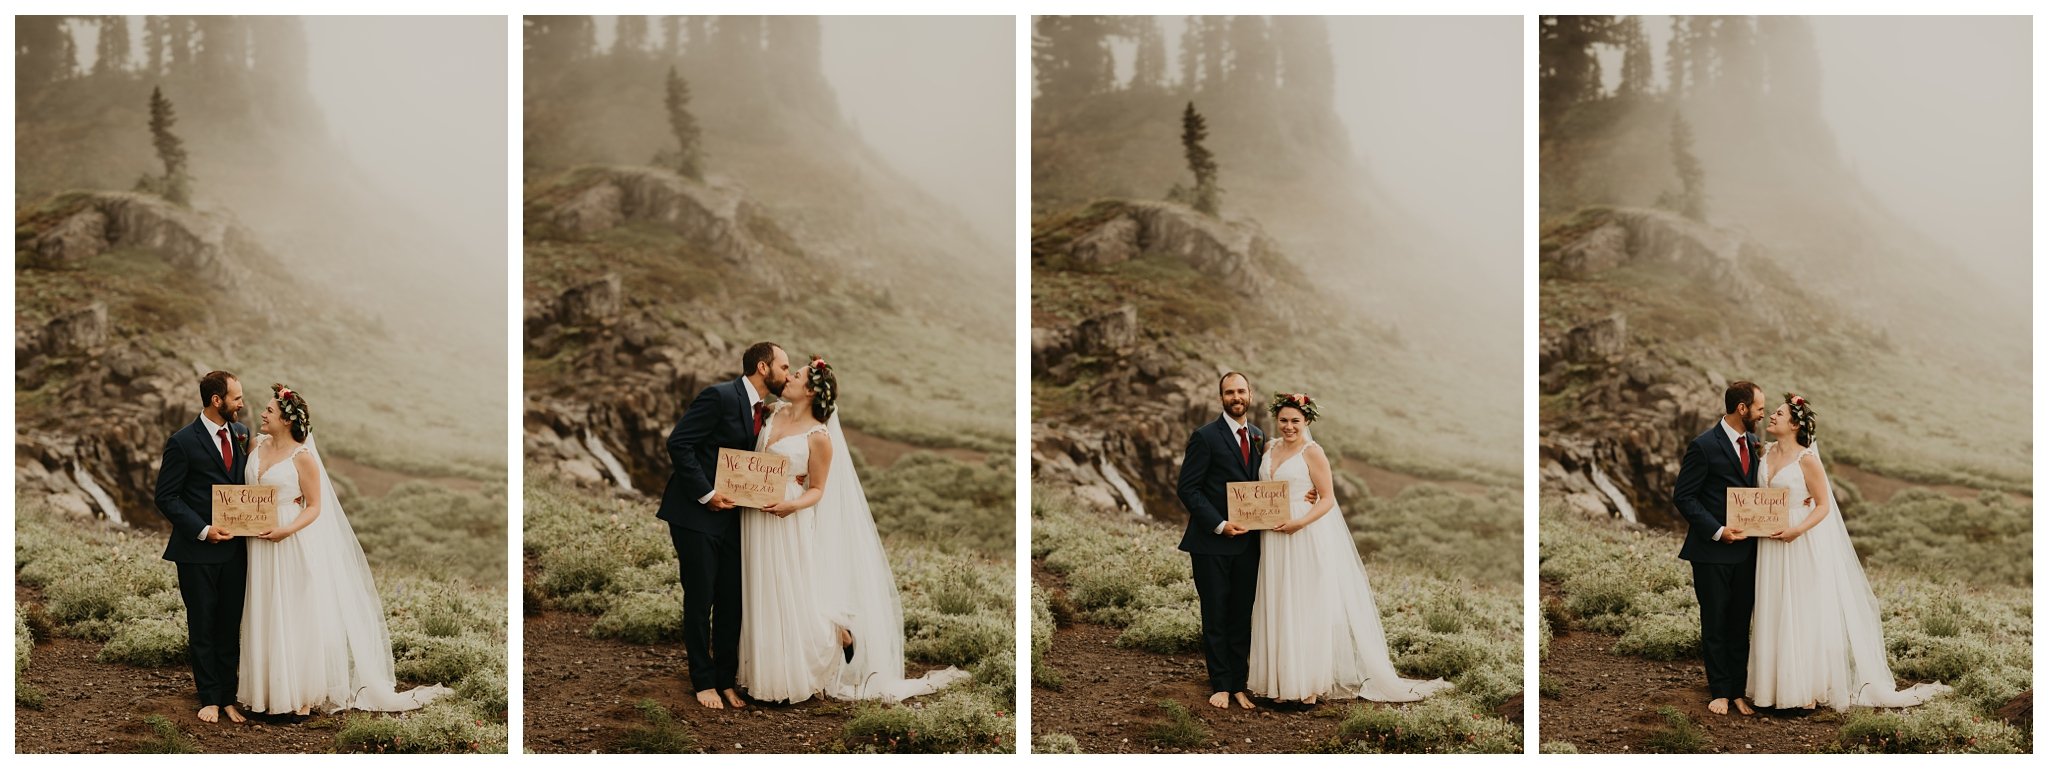 Sarah Gabe Elopement - Mt Rainier, WA - Boise Idaho Family Photographer - Kamra Fuller Photography_0075.jpg